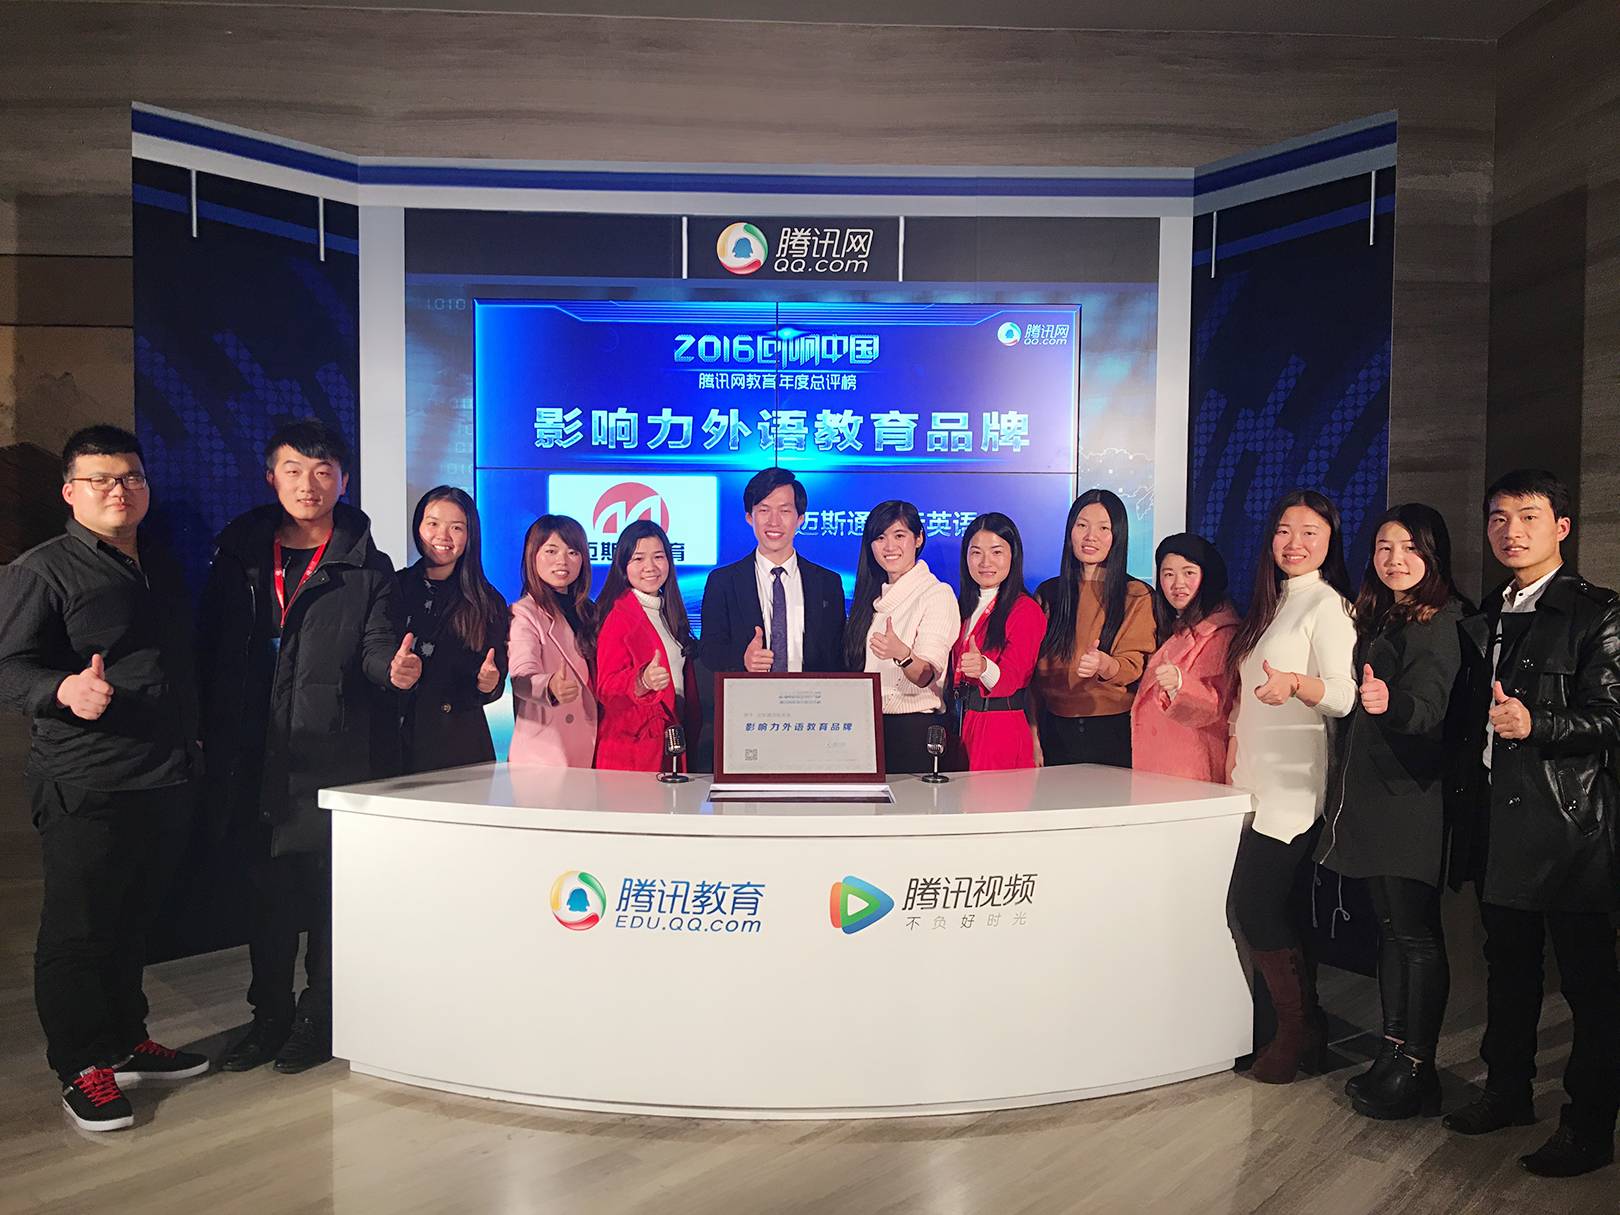 Milestone English2016年度腾讯教育“回响中国”盛典荣获“最具影响力外语教育品牌”奖